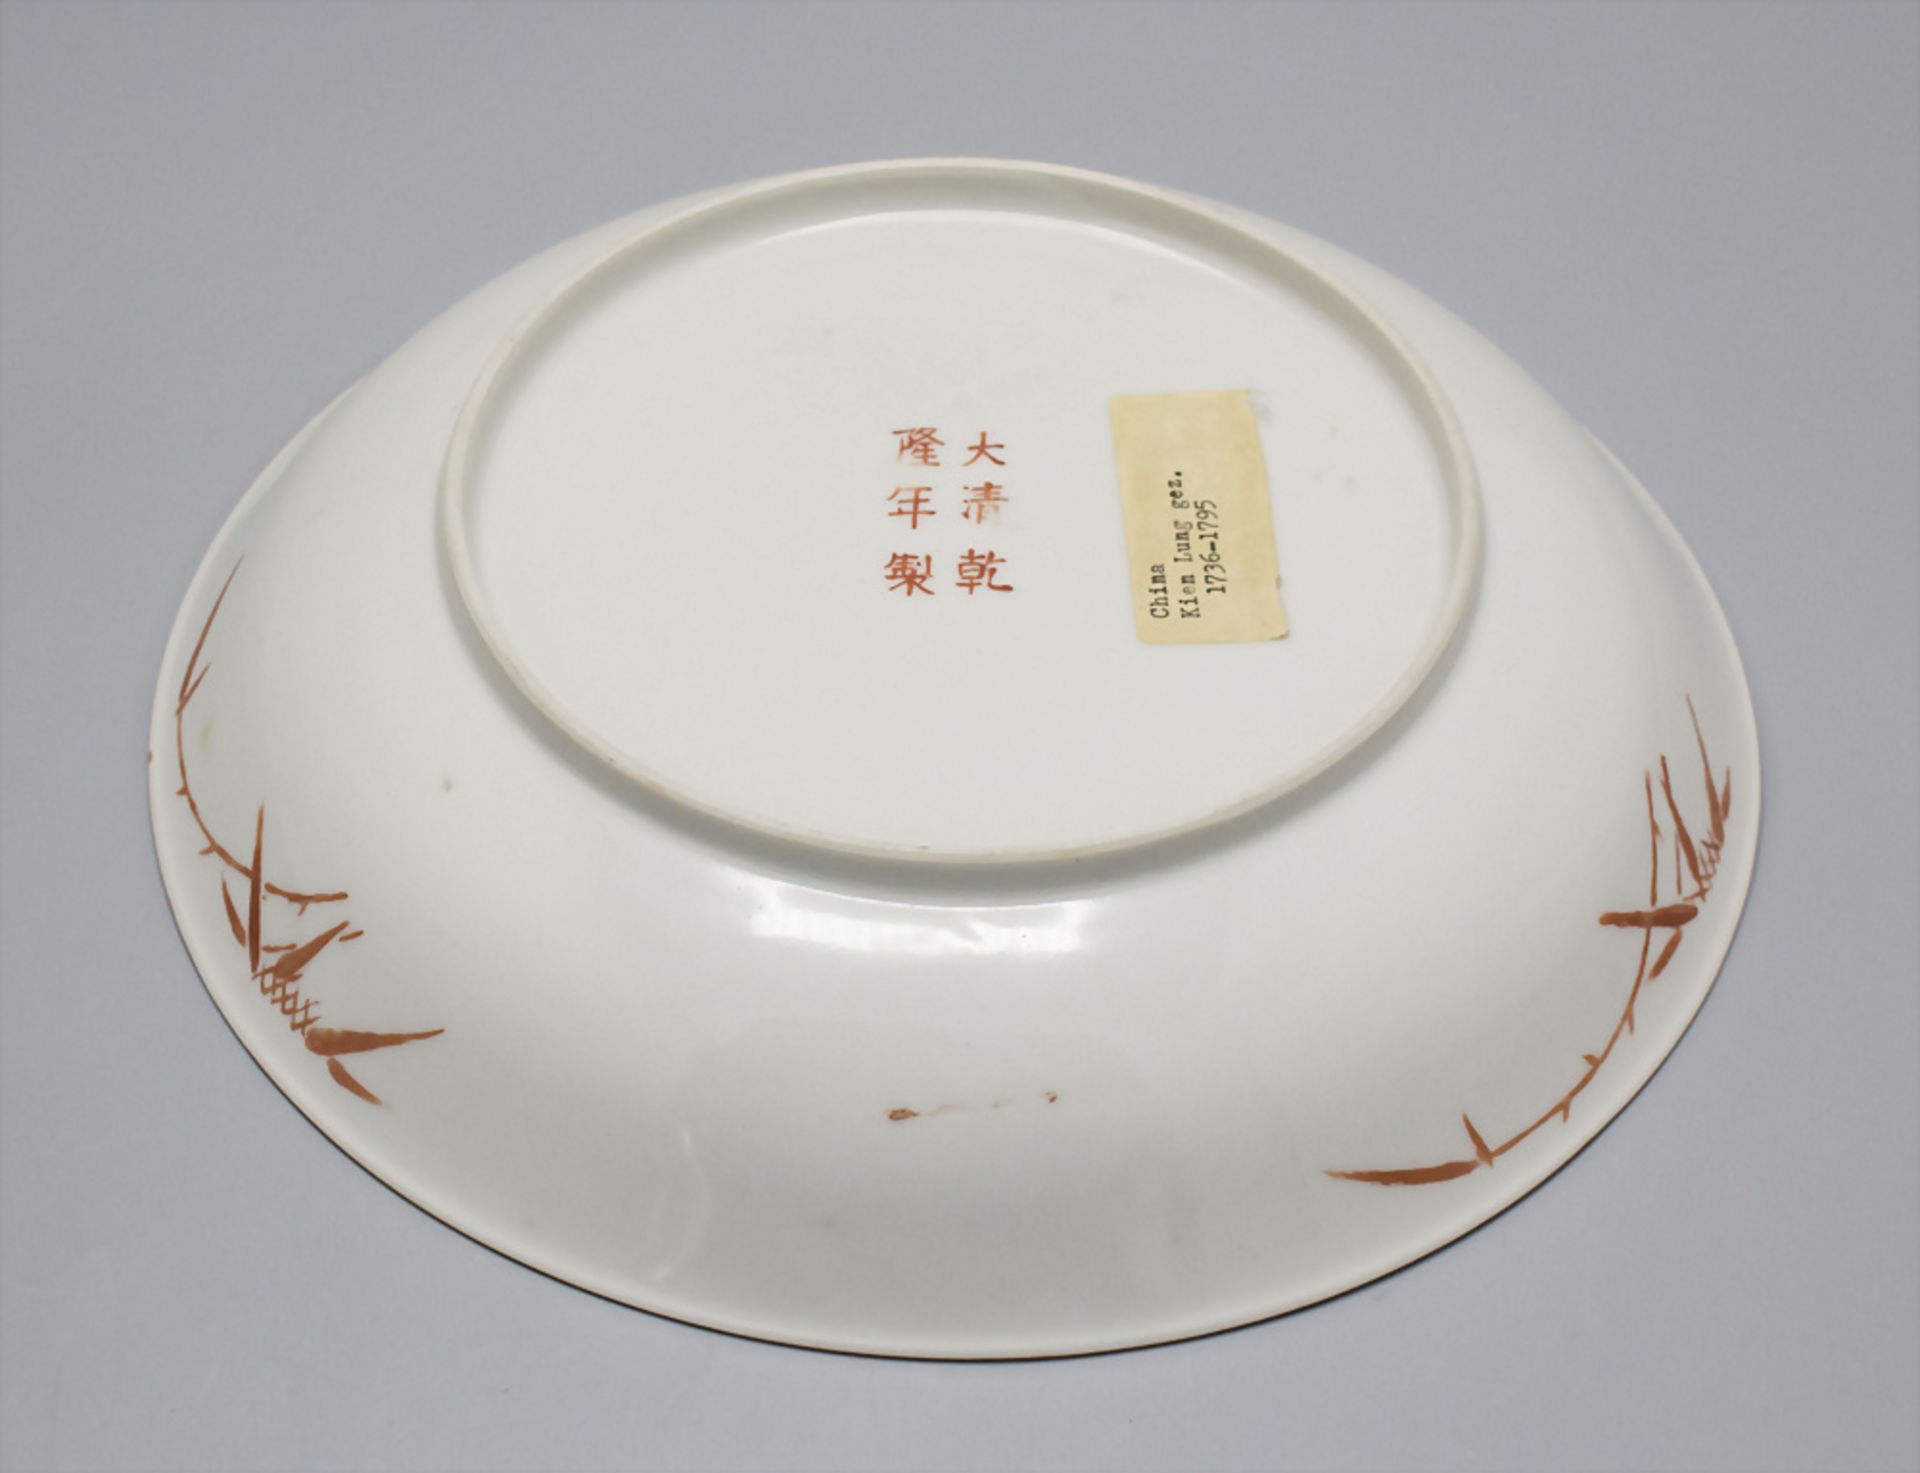 Teller mit Drachen und Phönix Dekor / A plate with dragon and phoenix, Kien Lung, China, 18. Jh. - Image 3 of 3